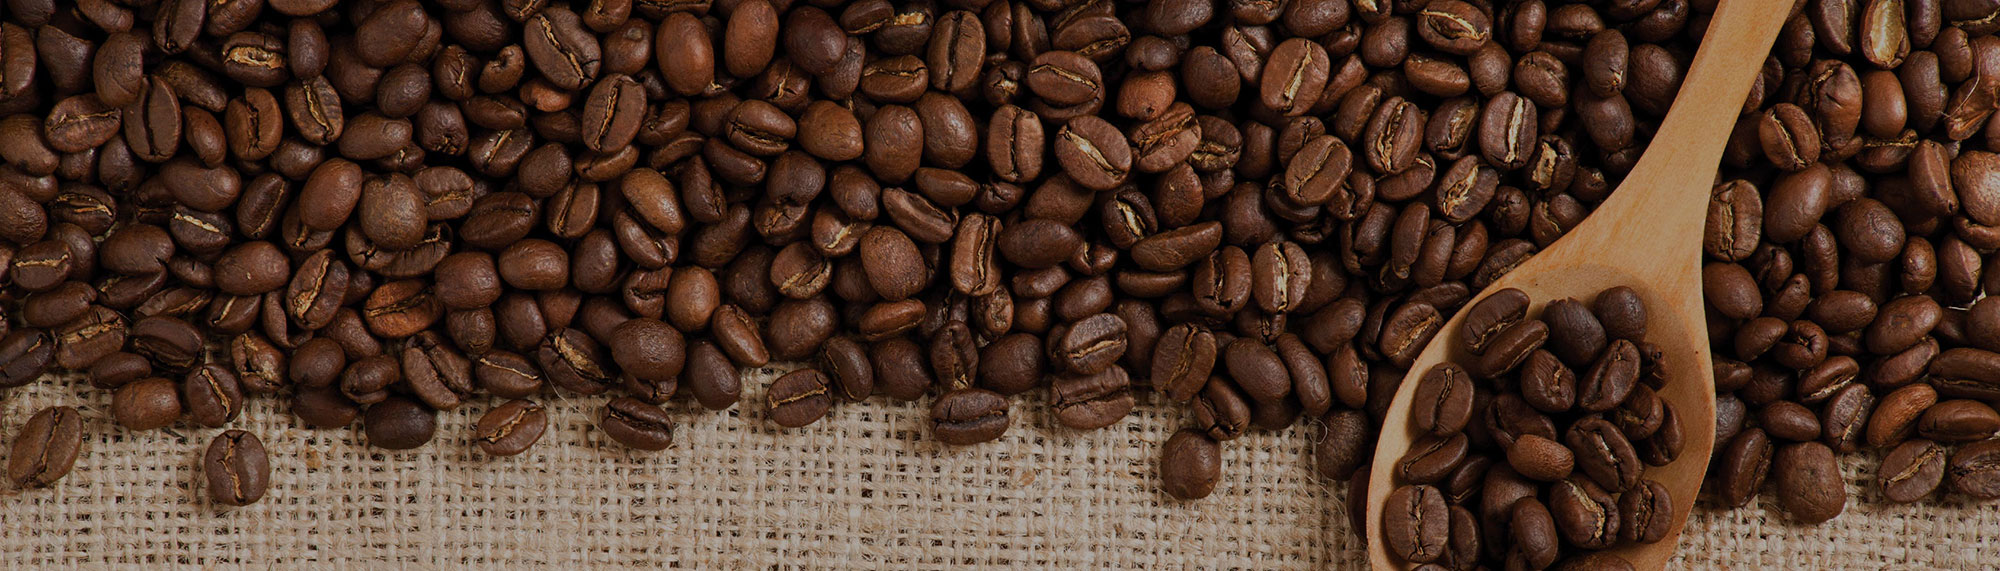 Aroma Coffee Beans